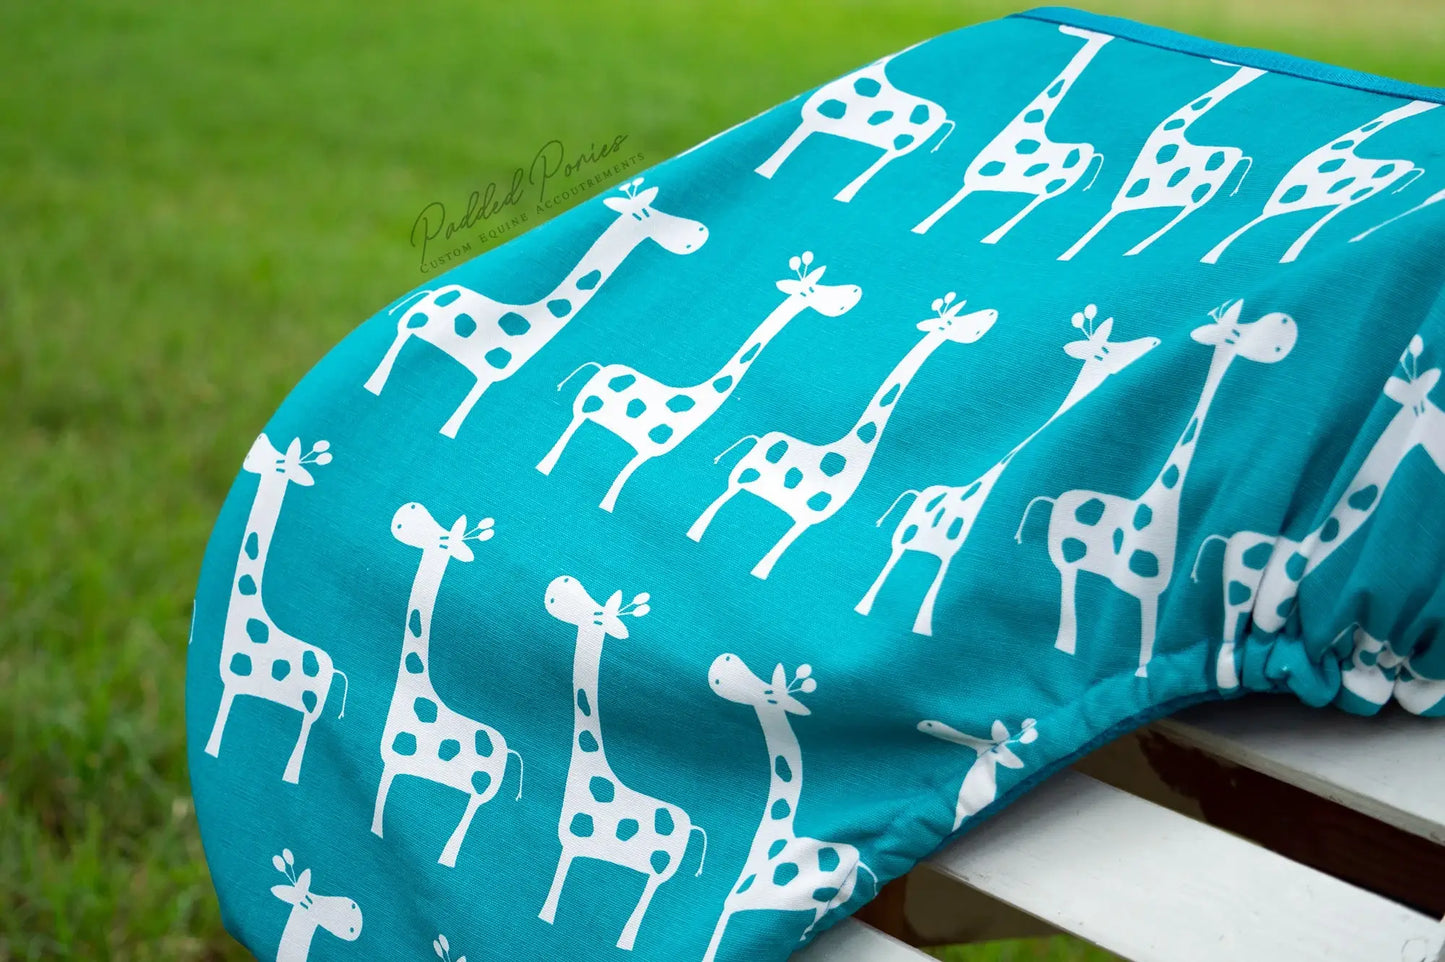 Turquoise Teal Giraffes Animal Print All Purpose Saddle Cover